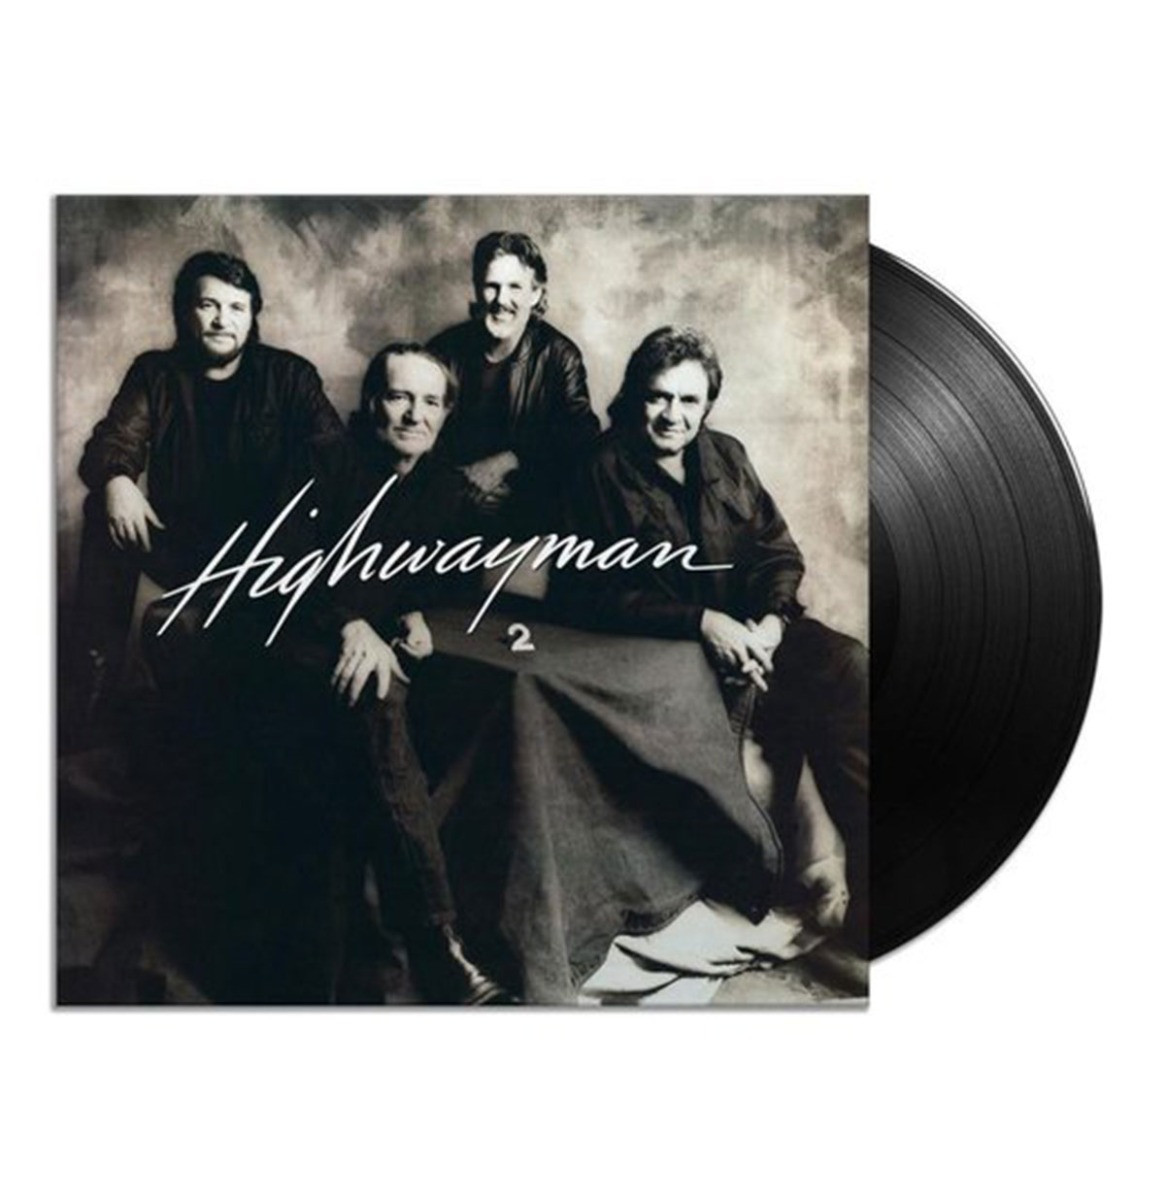 Johnny Cash, Waylon Jennings, Willie Nelson And Kris Kristofferson - Highwayman 2 LP